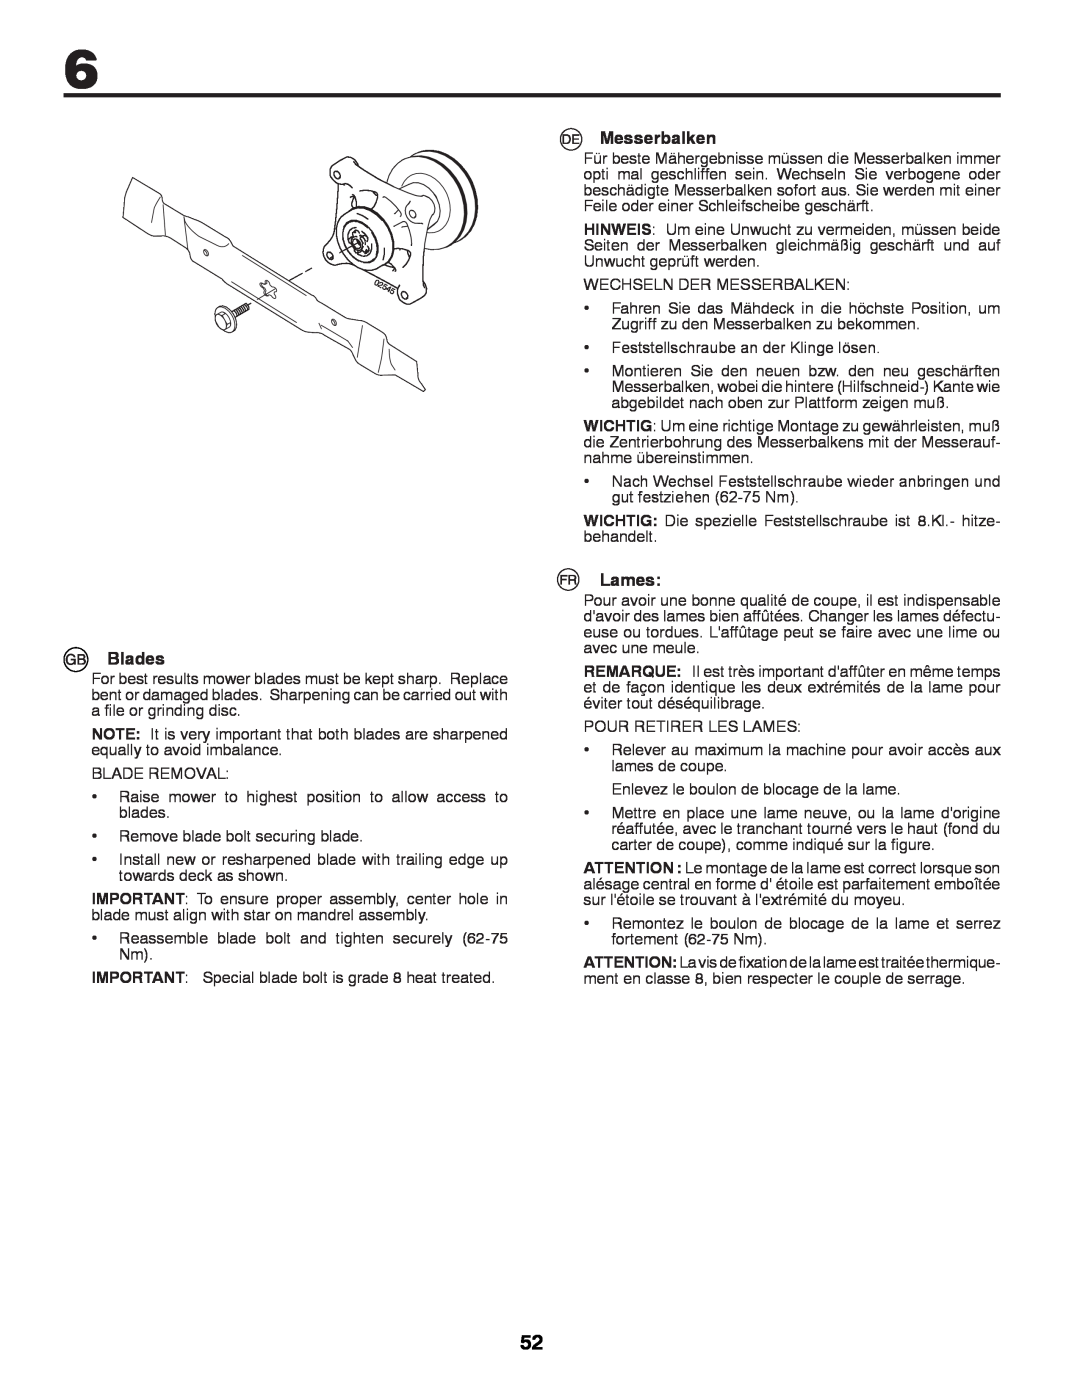 Partner Tech P11577 instruction manual Blades, Messerbalken, Lames 